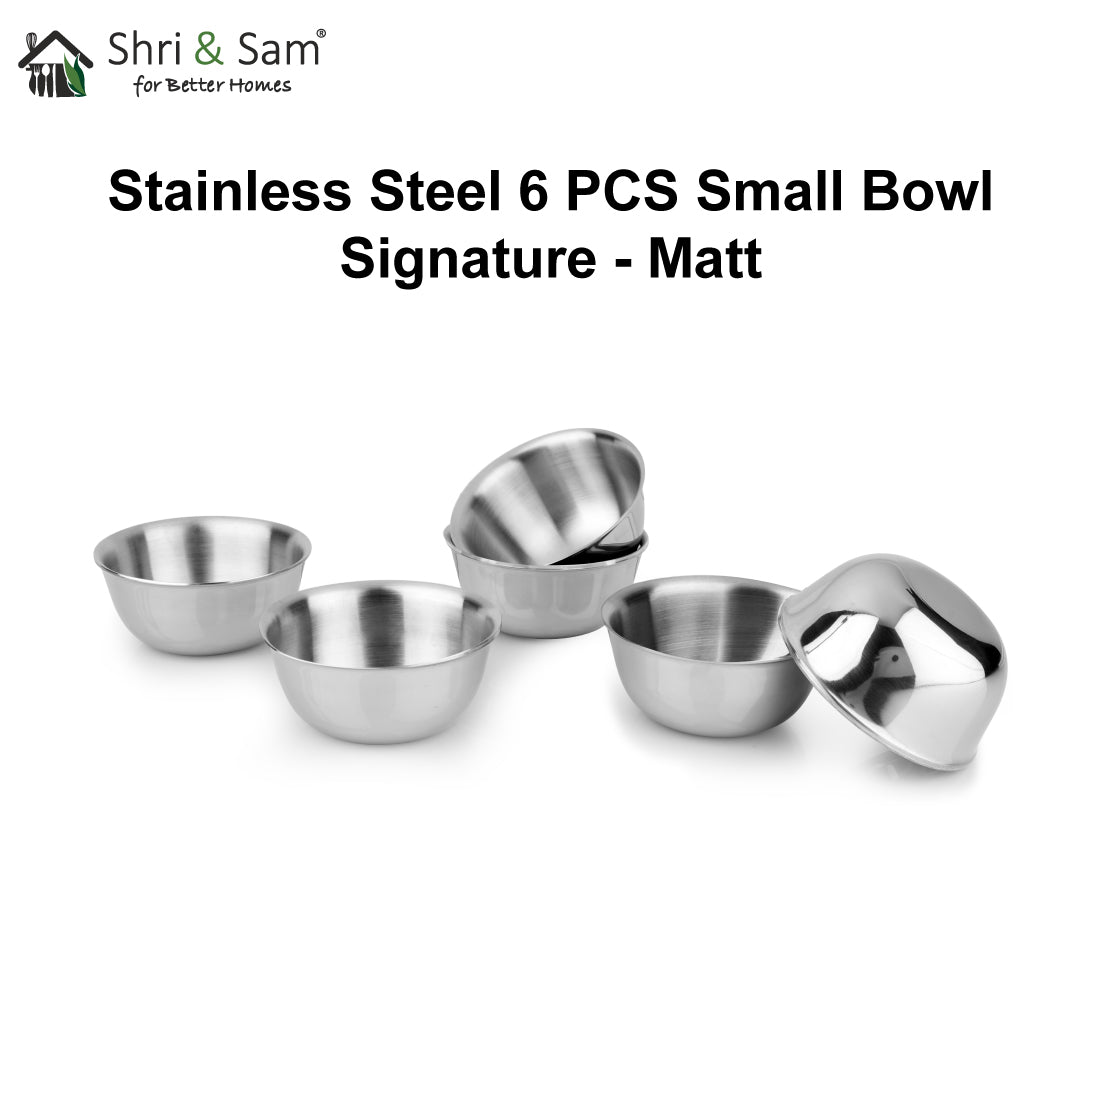 Stainless Steel 6 PCS Small Bowl Signature - Matt